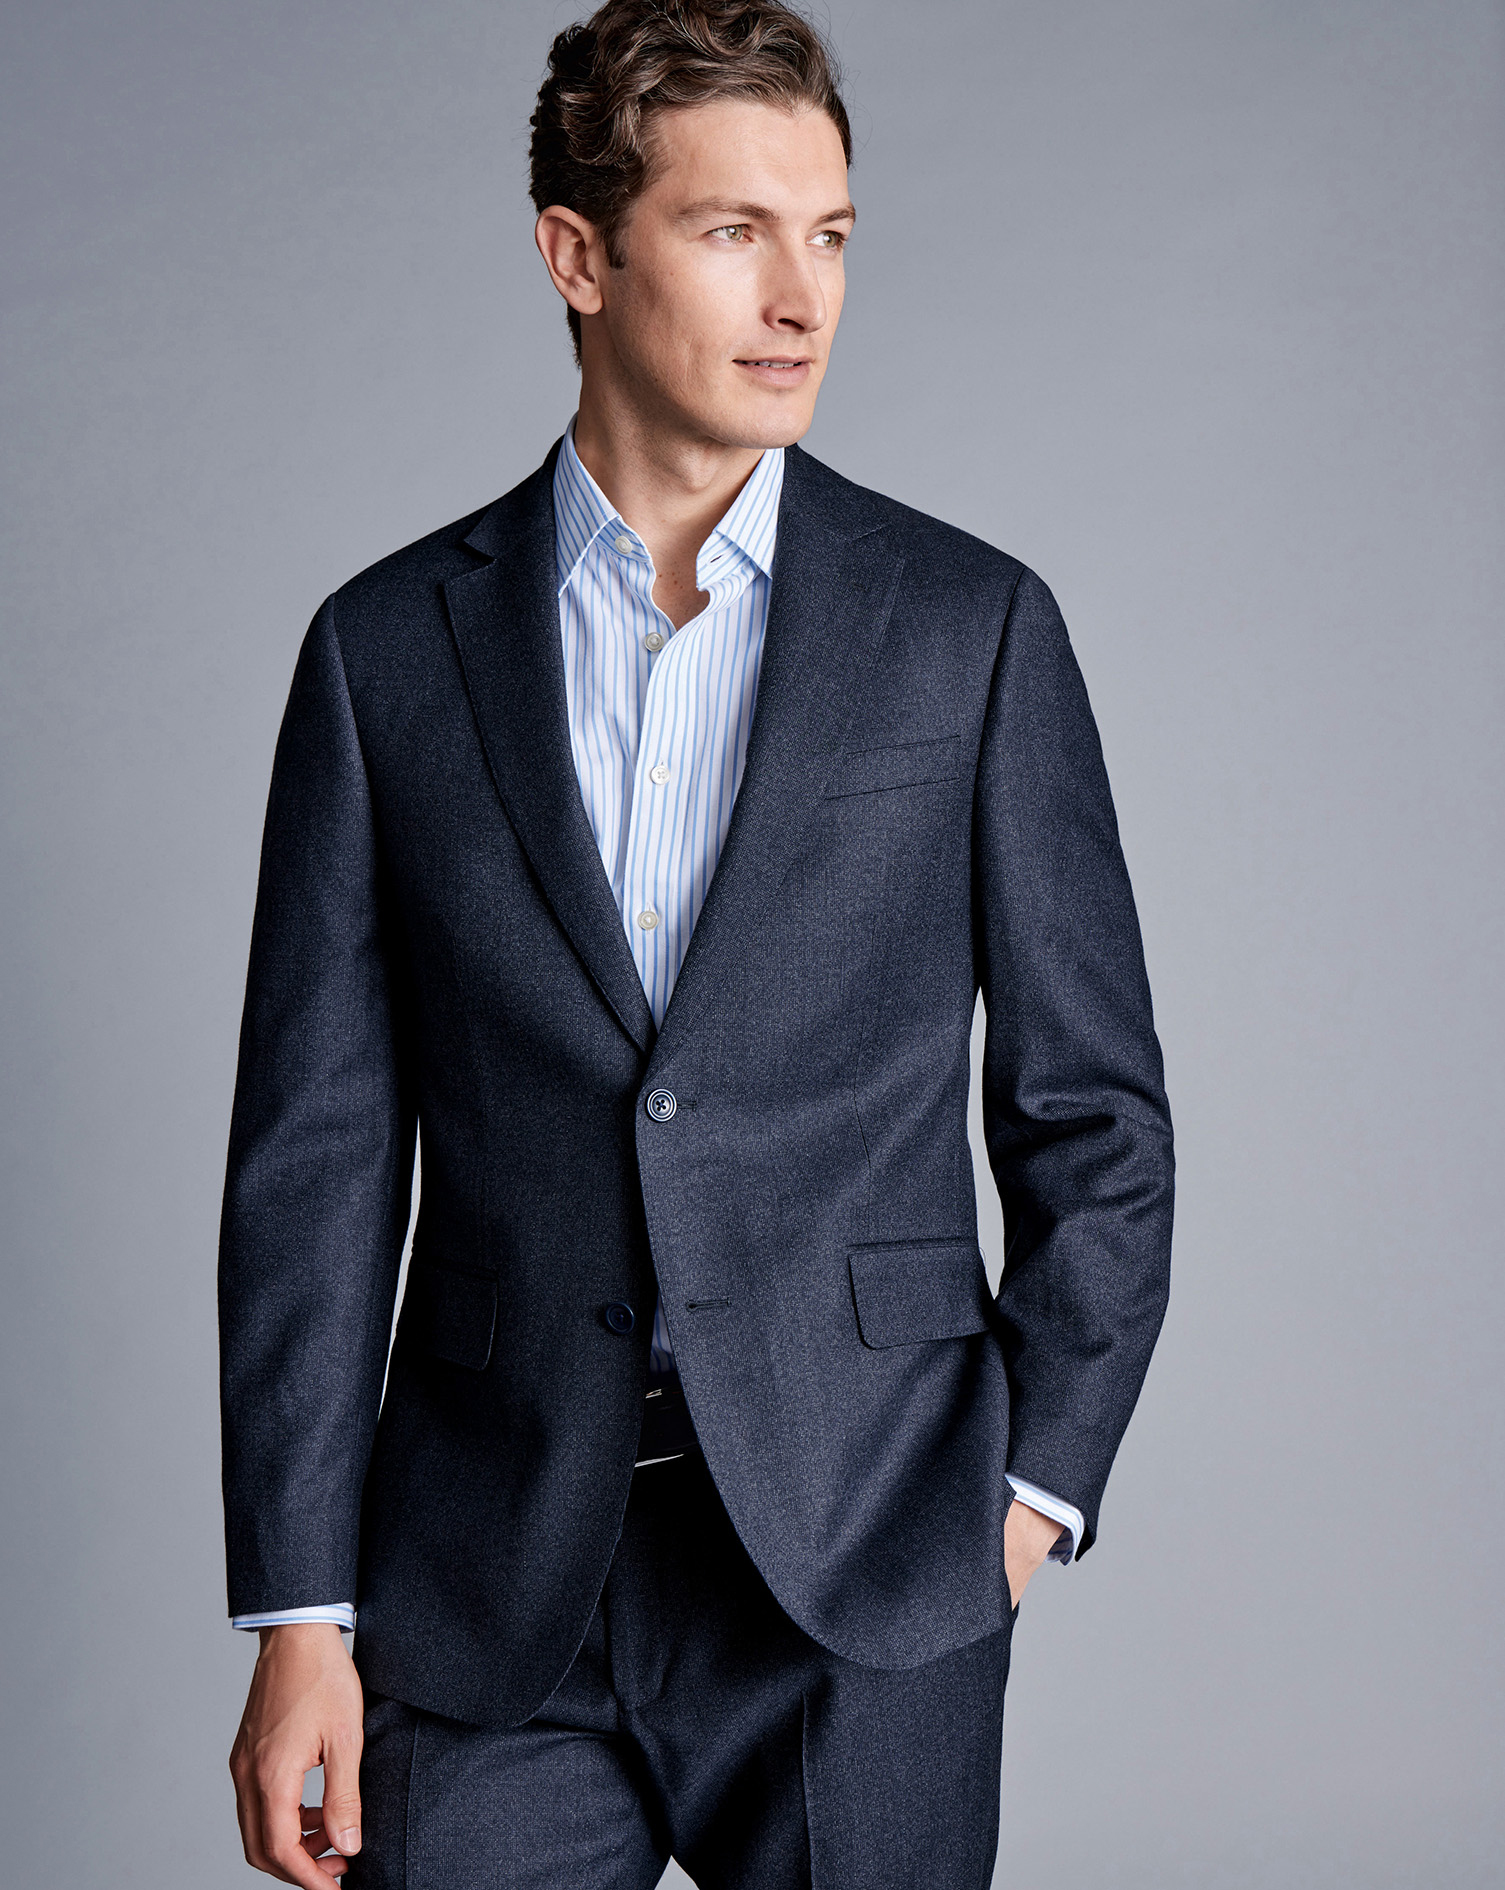 Men's Charles Tyrwhitt Italian Pindot Suit na Jacket - Denim Blue Size 46R Wool
